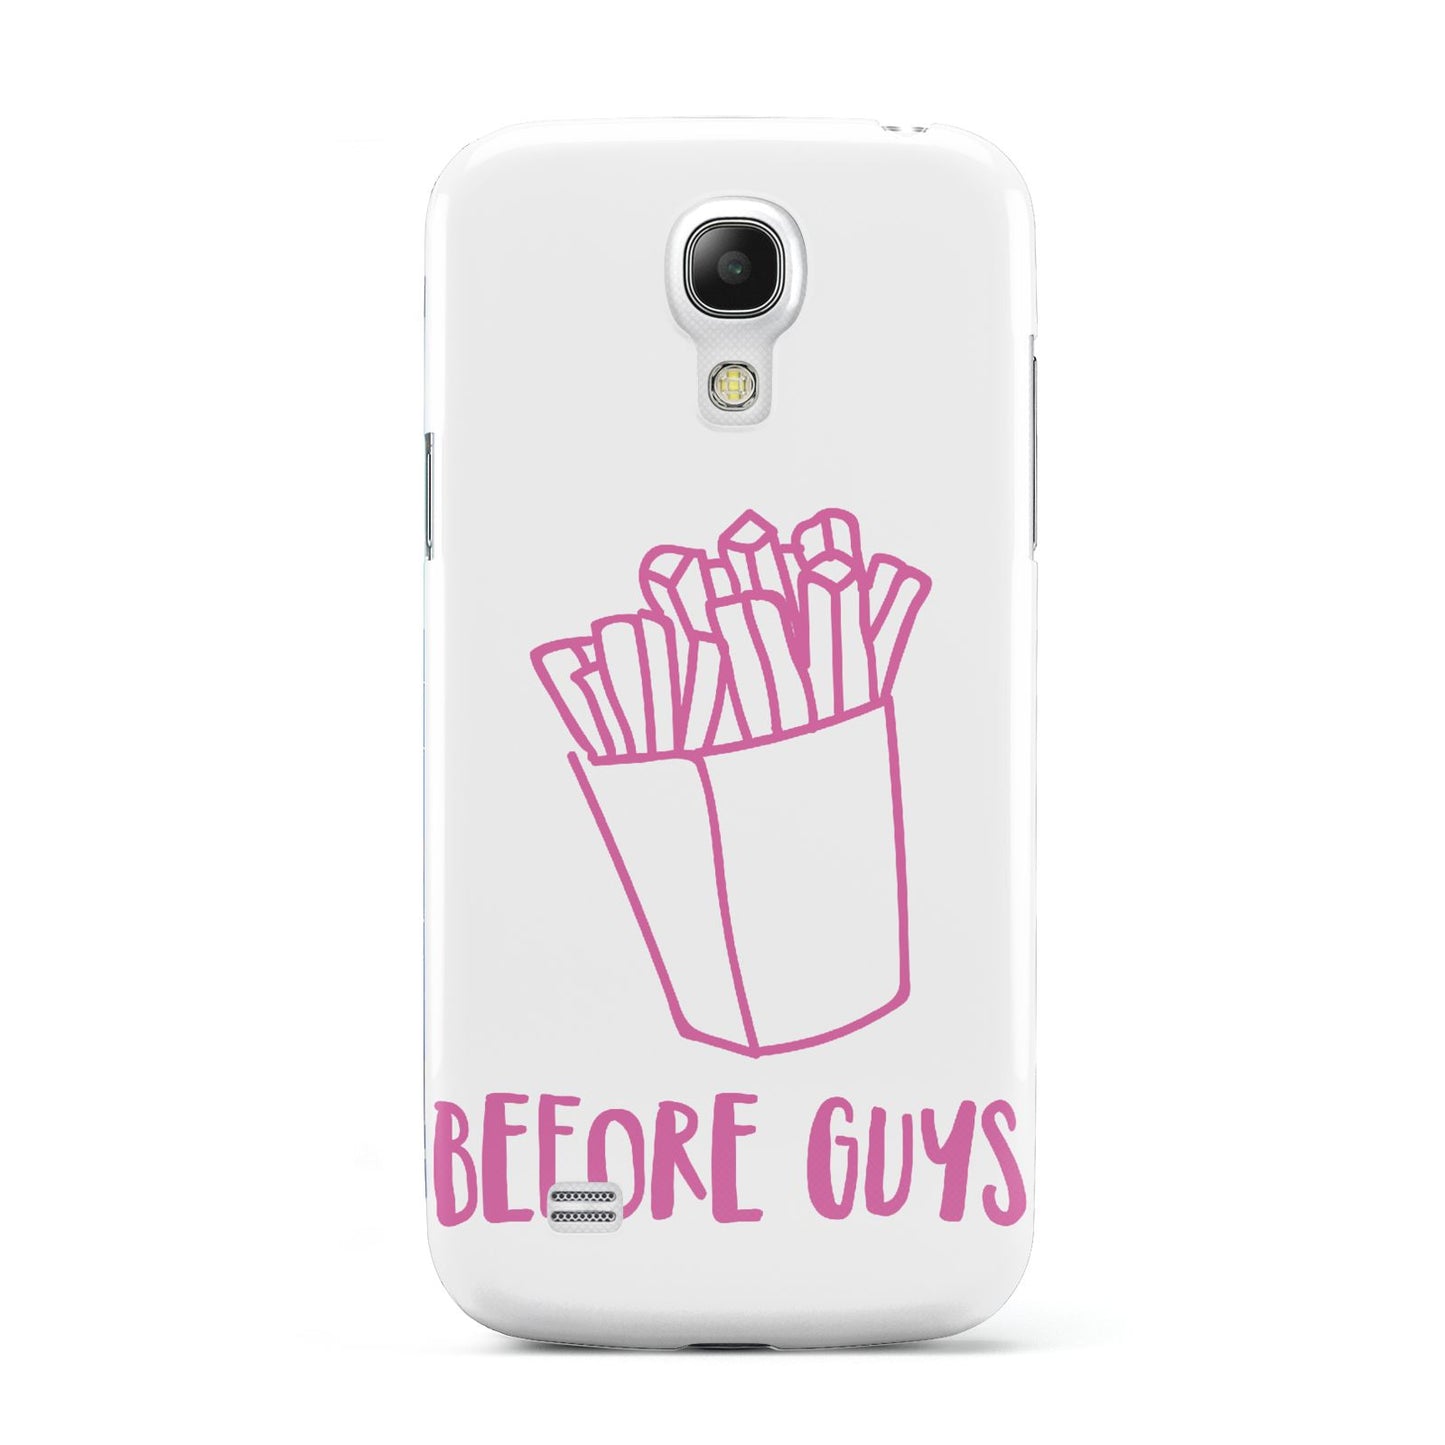 Valentines Fries Before Guys Samsung Galaxy S4 Mini Case